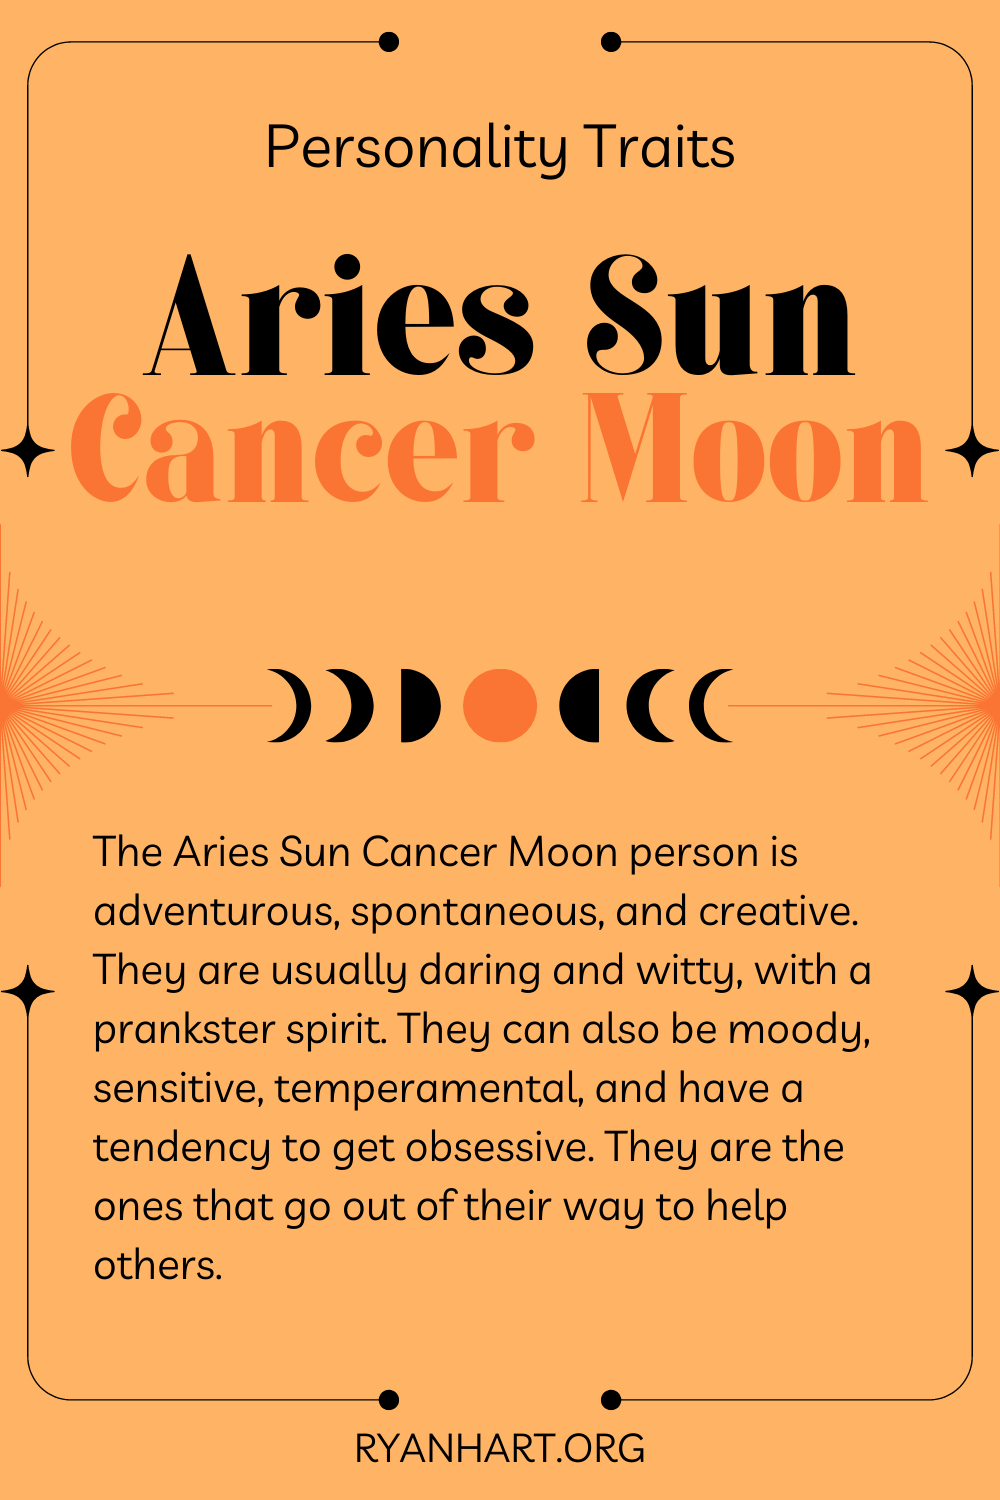 Aries Sun Cancer Moon Description